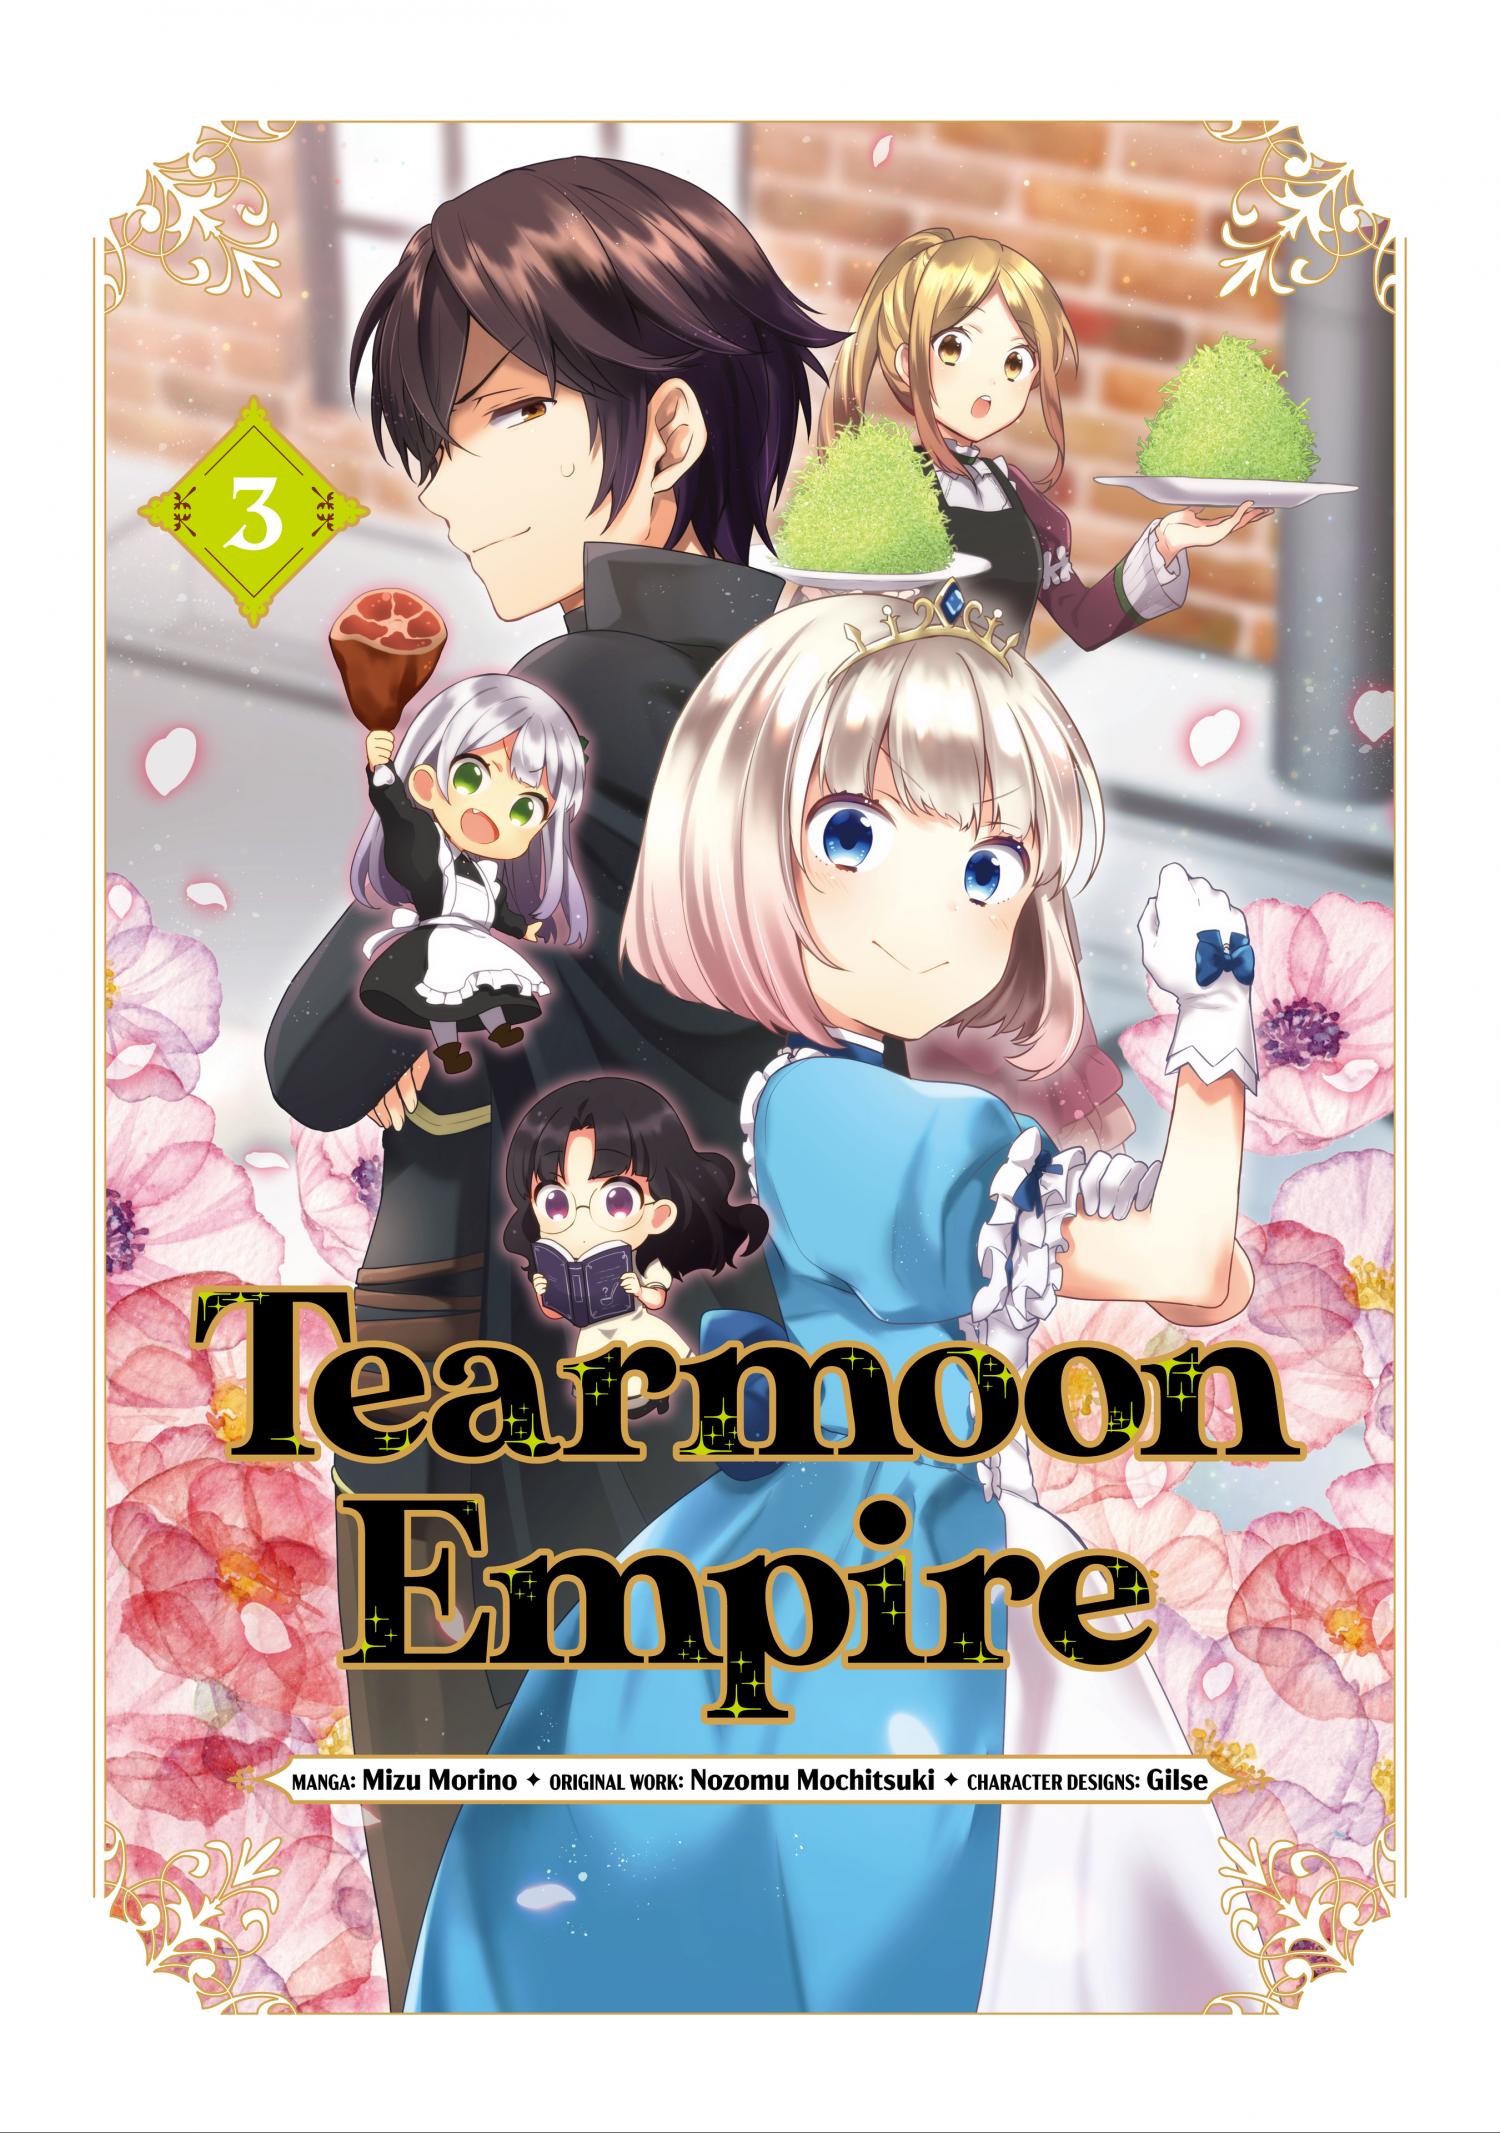 Tearmoon Empire Novel 1  Review  Anime News Network